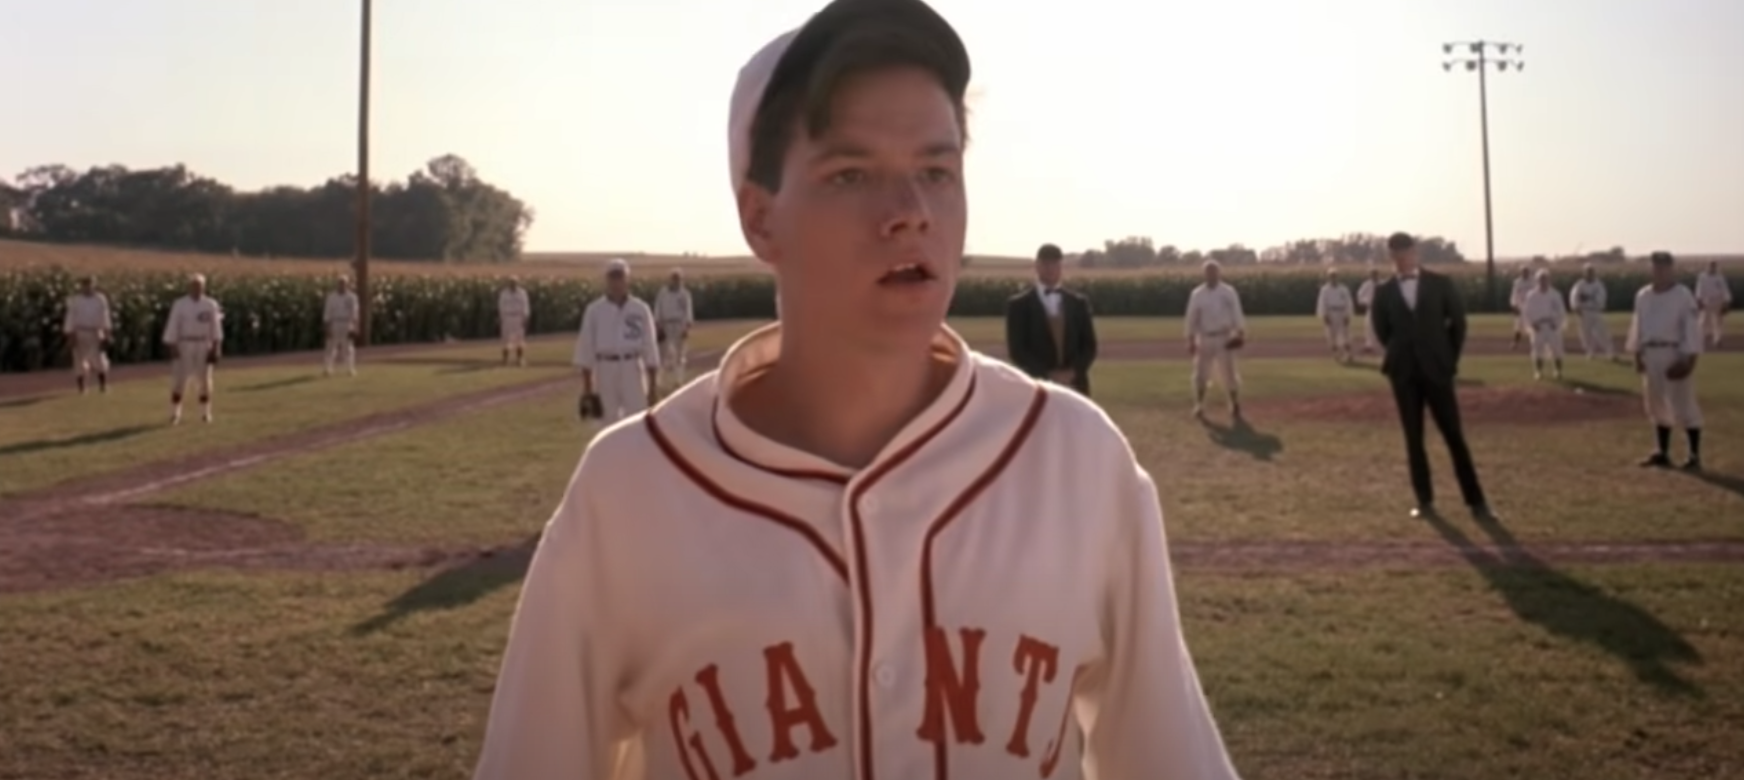 A man in a baseball uniform stands in a field